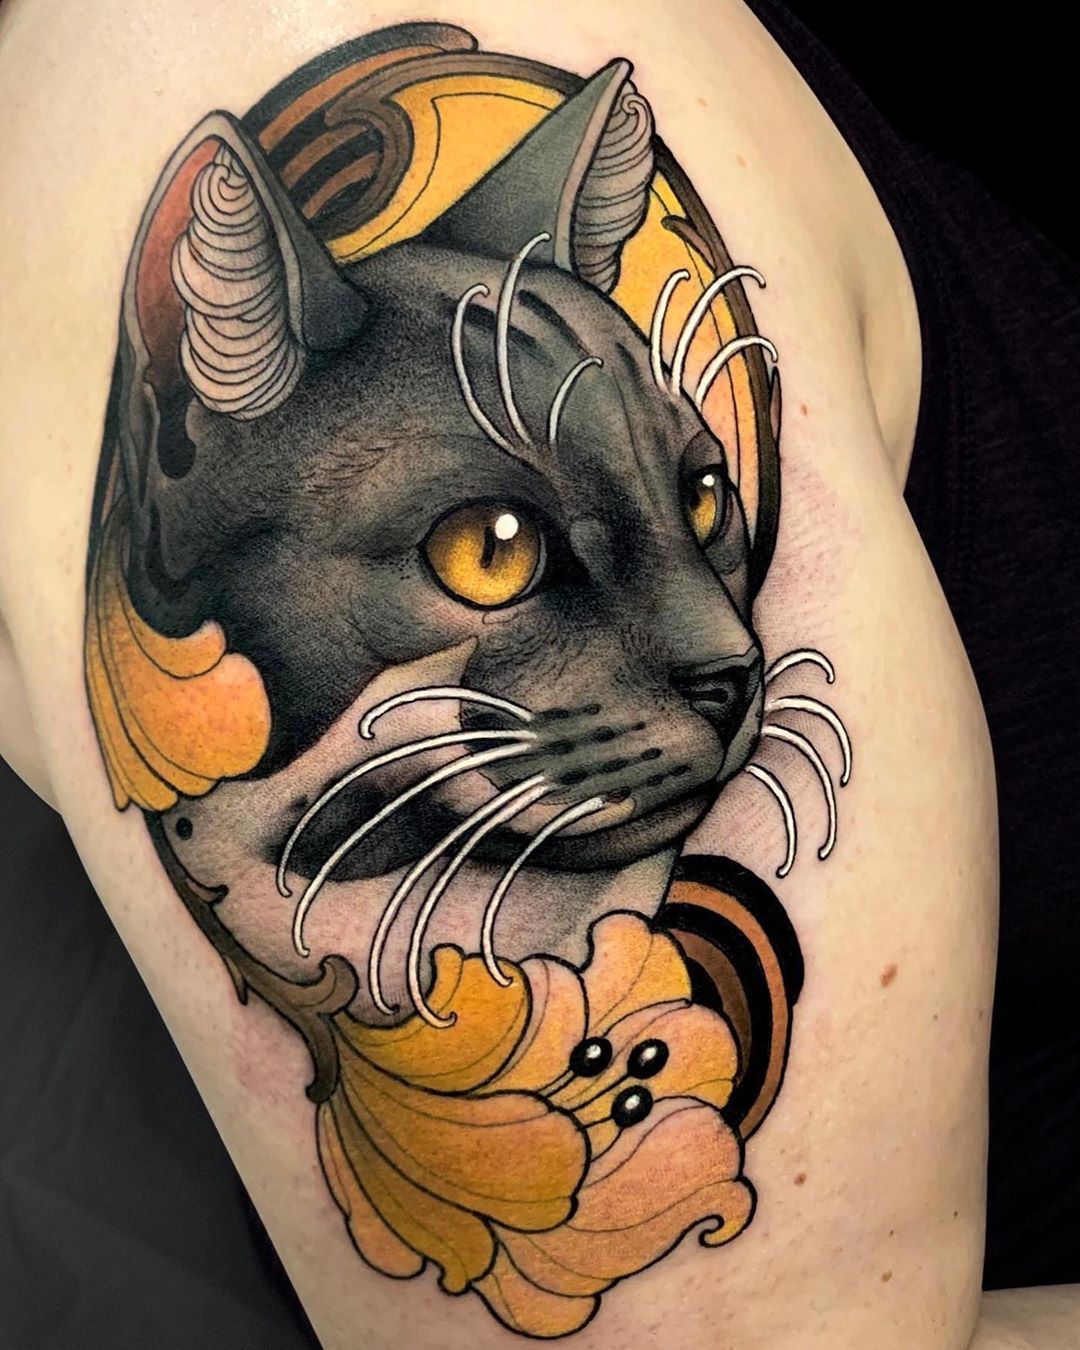 Lost In Time Tattoo And Body Piercing on Twitter By Patty tattoo tattoos  blackcat ghostcat LiT httpstcoRKMhhoxTlI httpstcoyodPJ1MA7t   Twitter